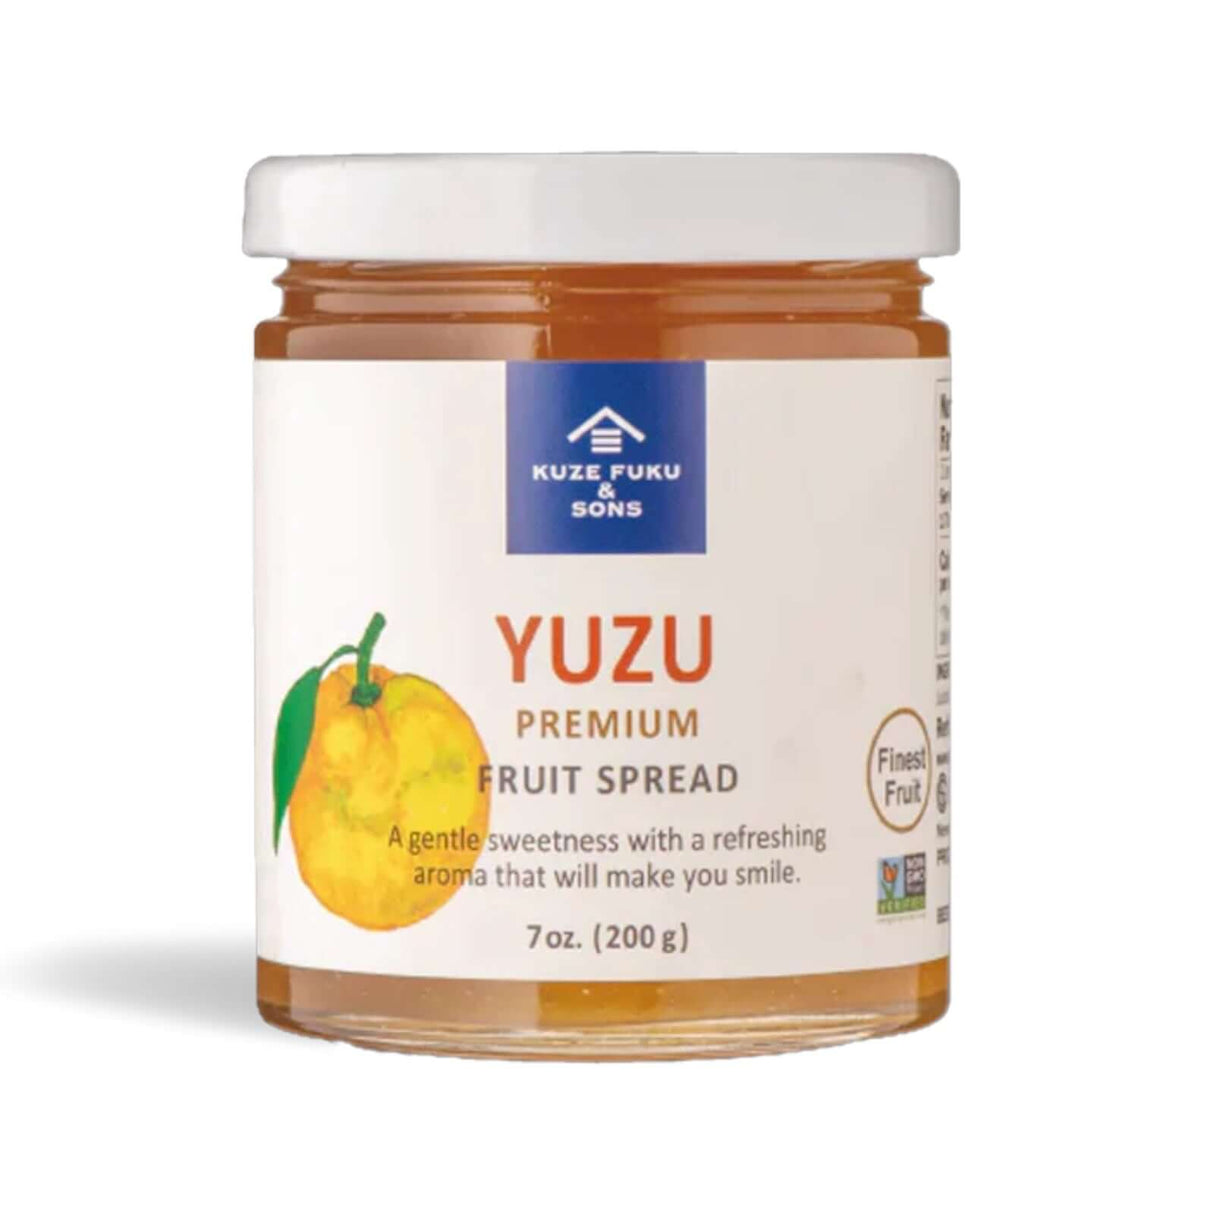 Kuze Fuku & Sons Yuzu Premium Fruit Spread